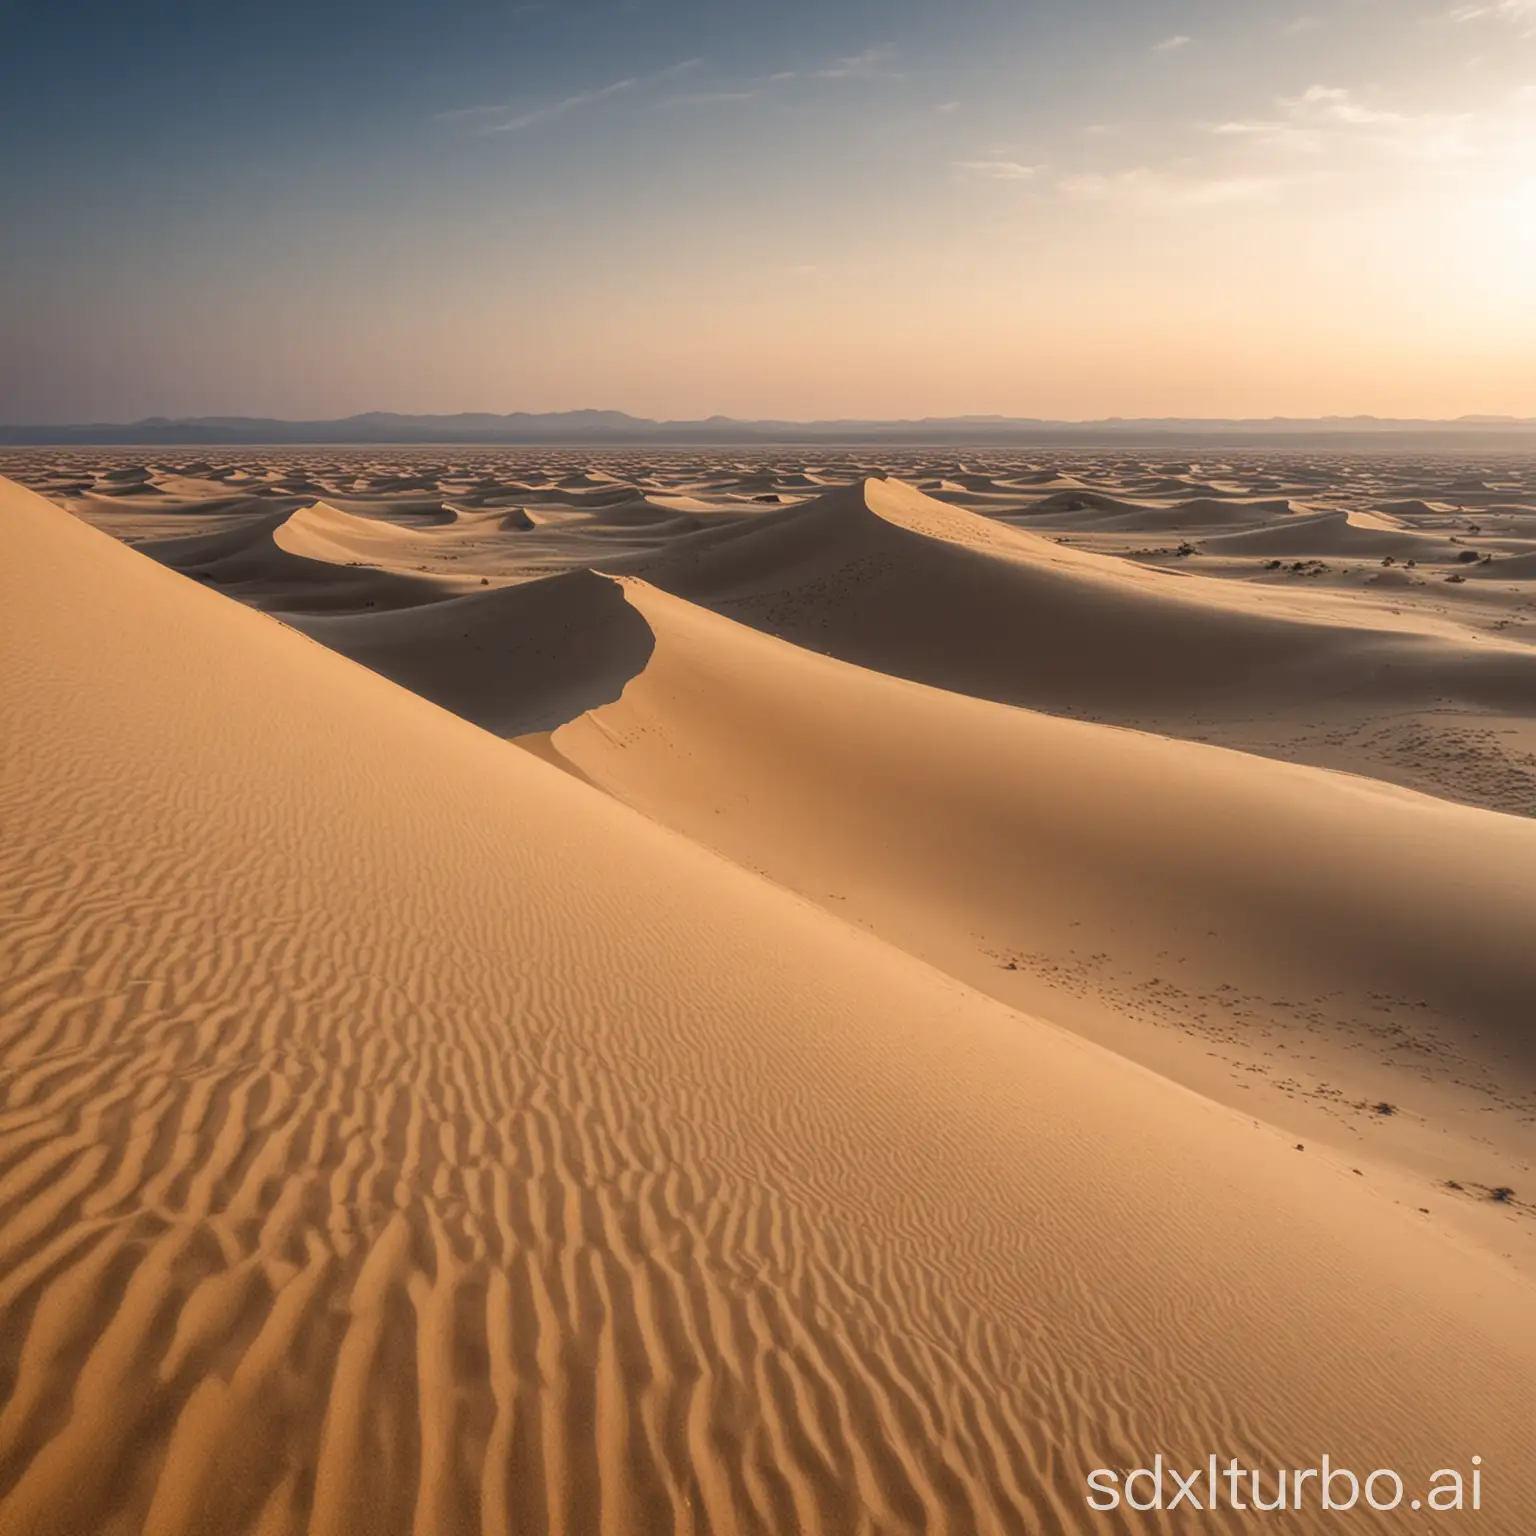 A vast hotizon of endless sand dunes